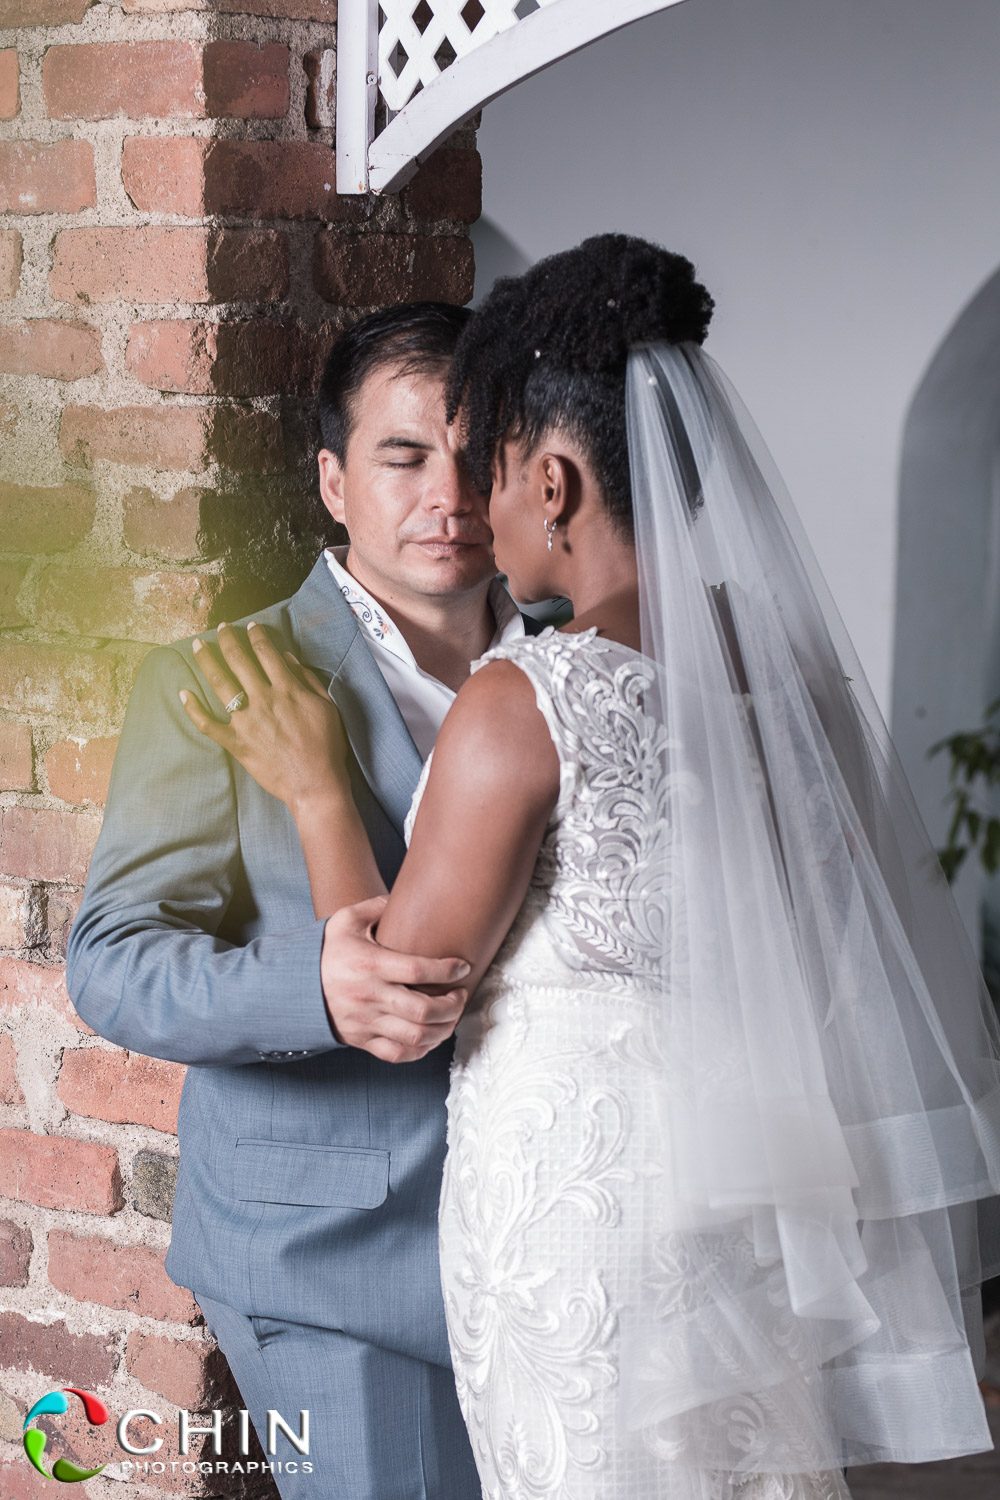 Jamaica Top Wedding Photographers